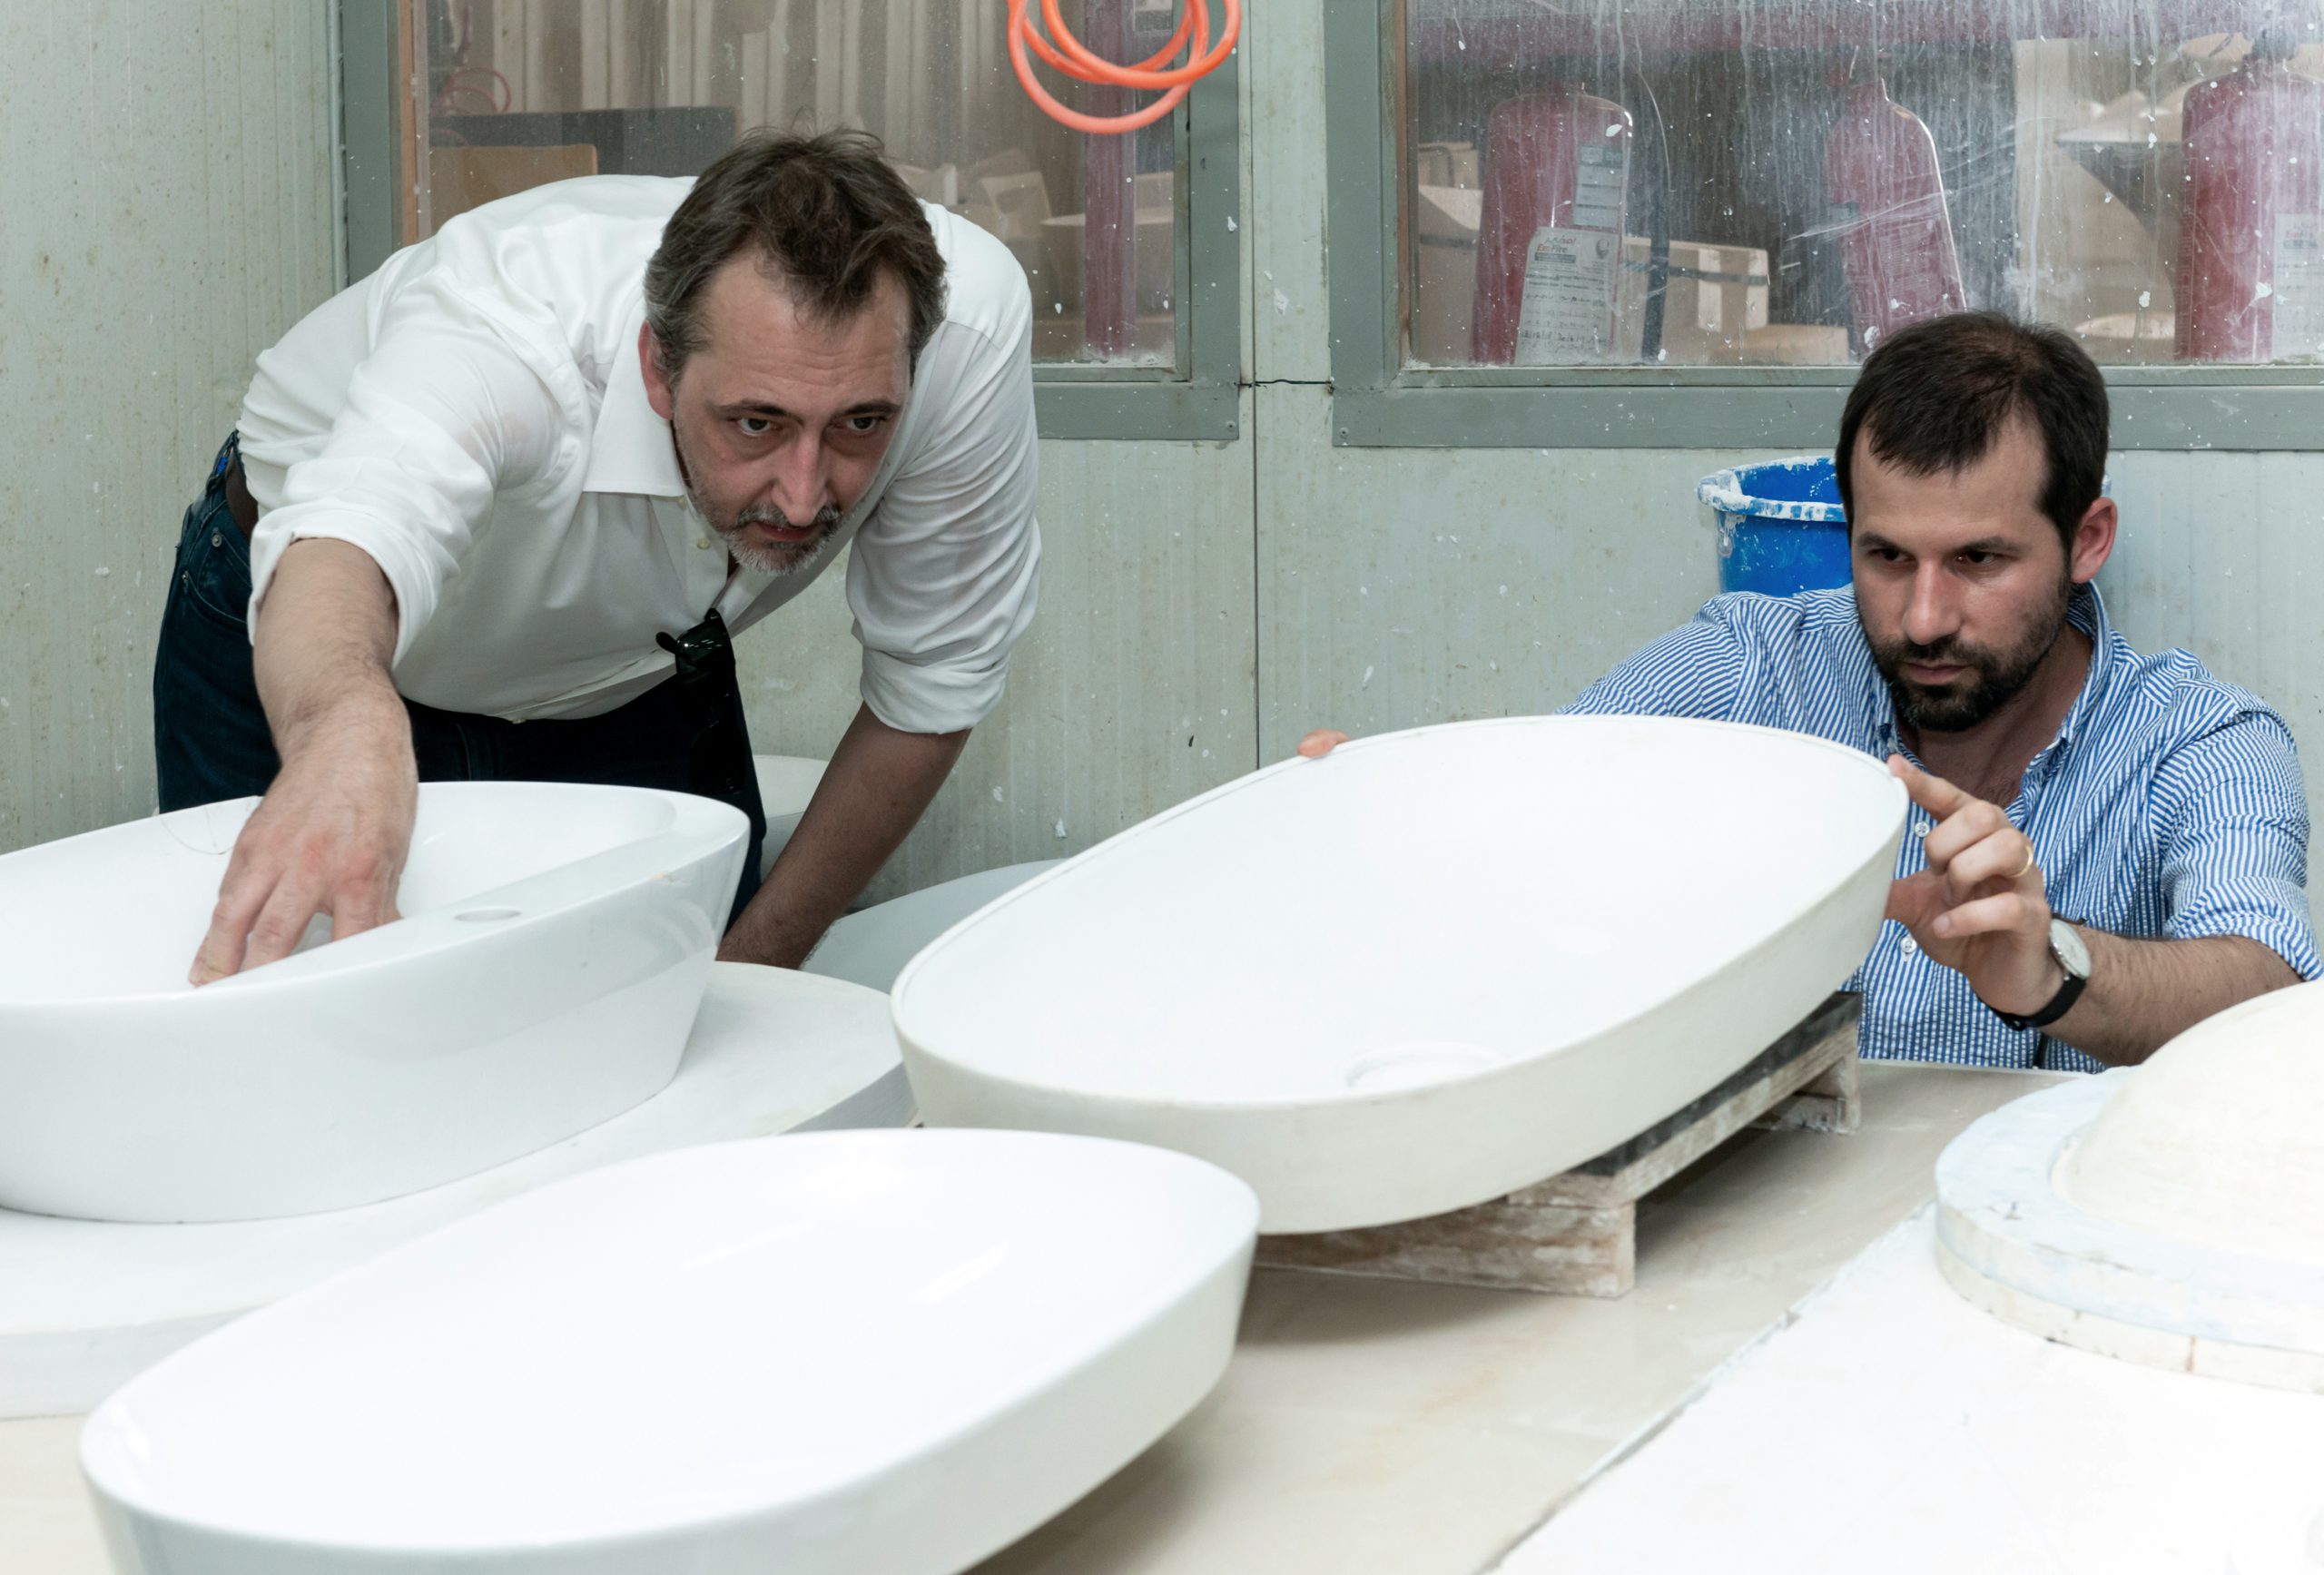 Variant washbasin prototypes designed by Debiasi Sandri for RAK Ceramics